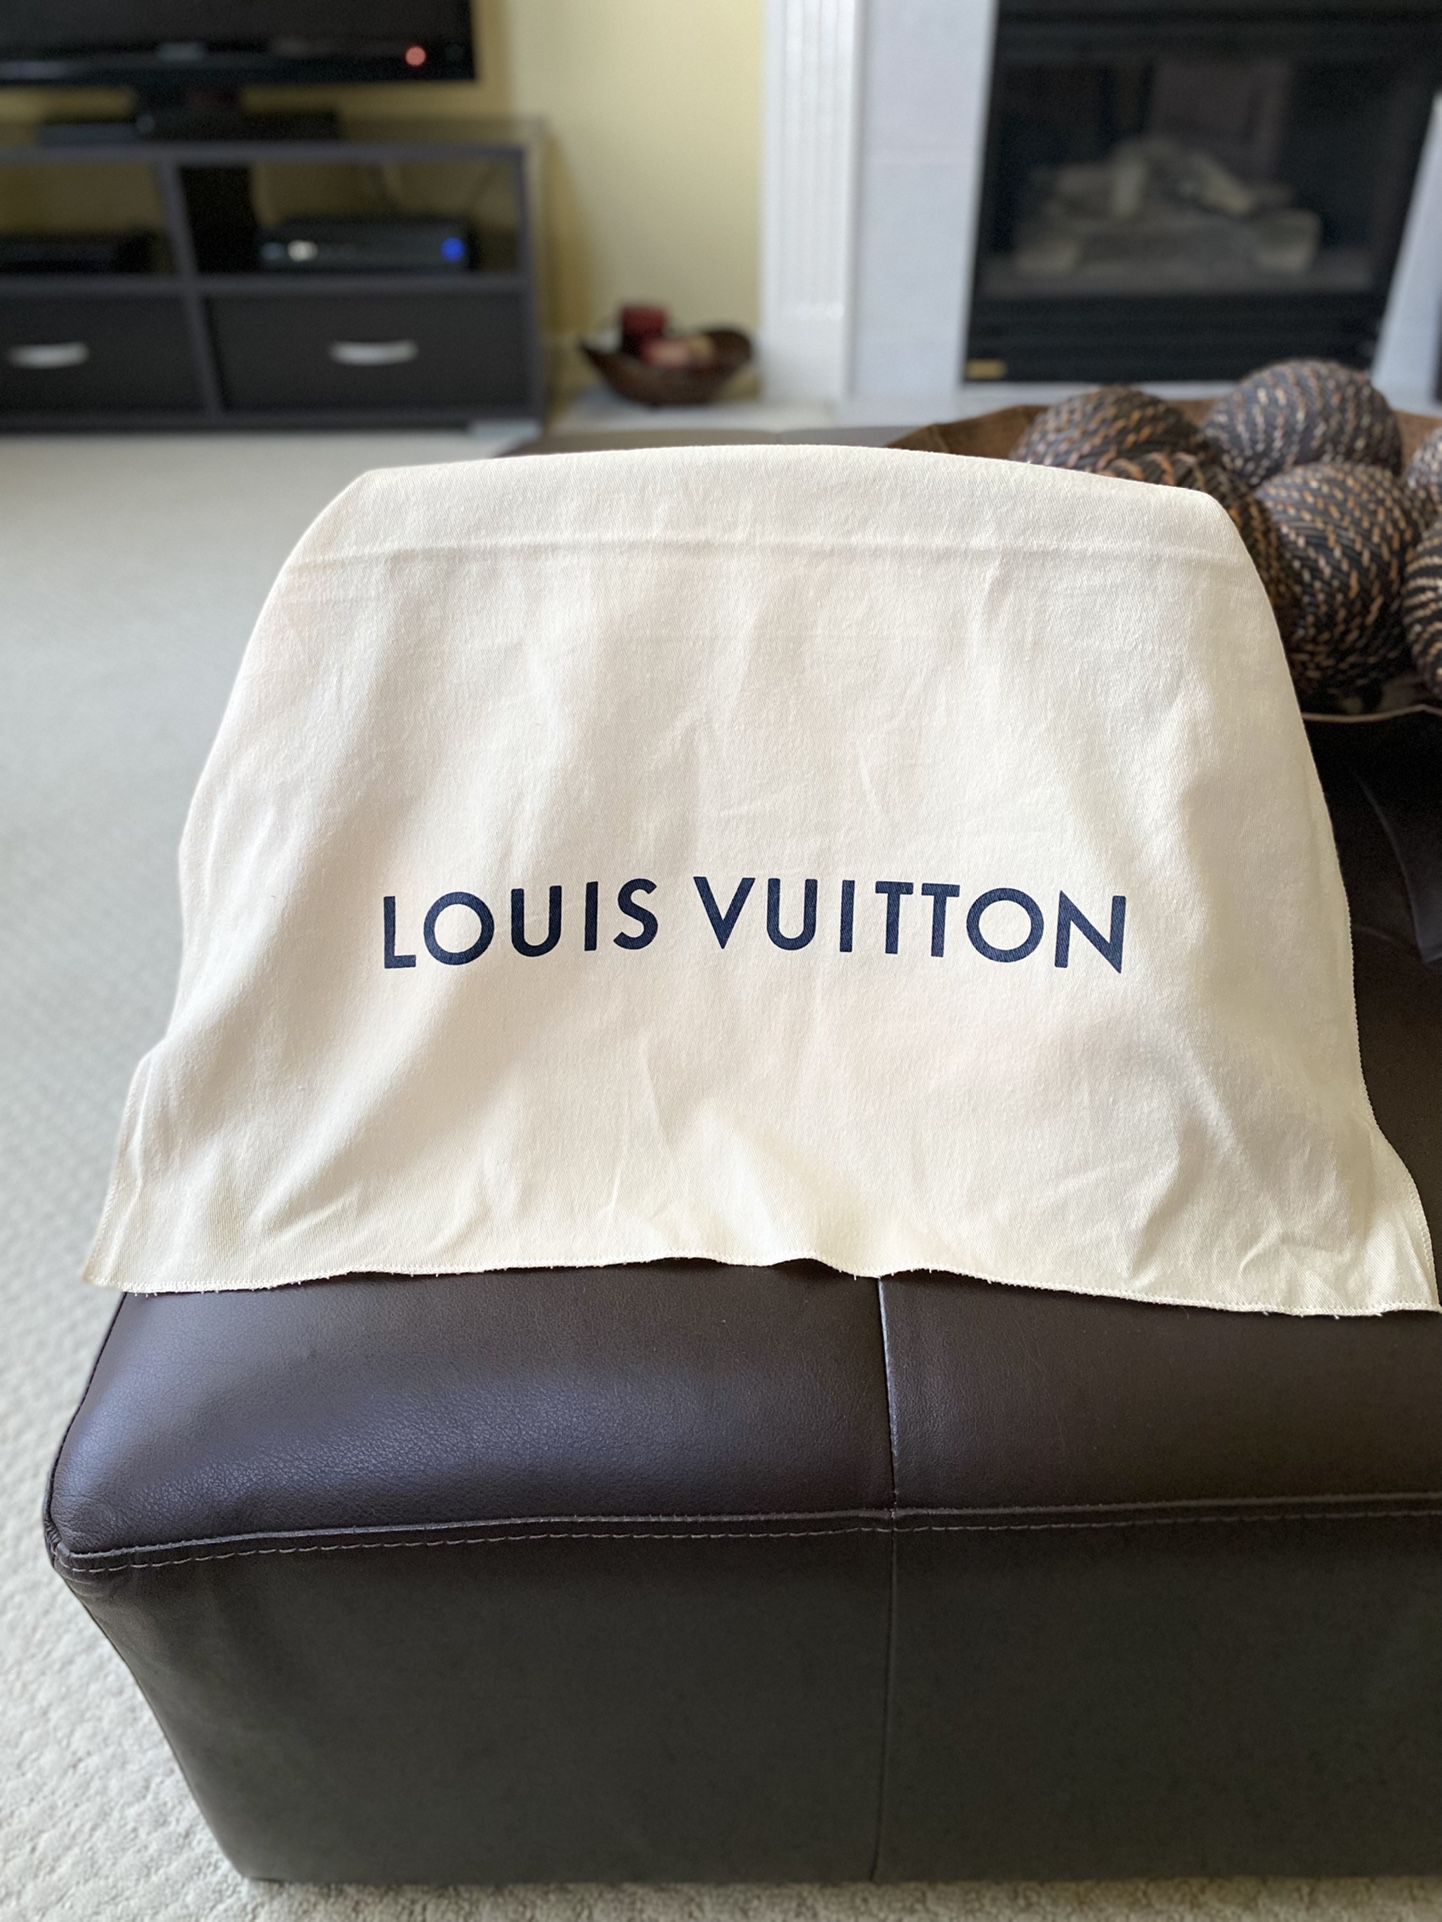 REDUCED* Louis Vuitton Rivoli MM in Damier Ebene for Sale in